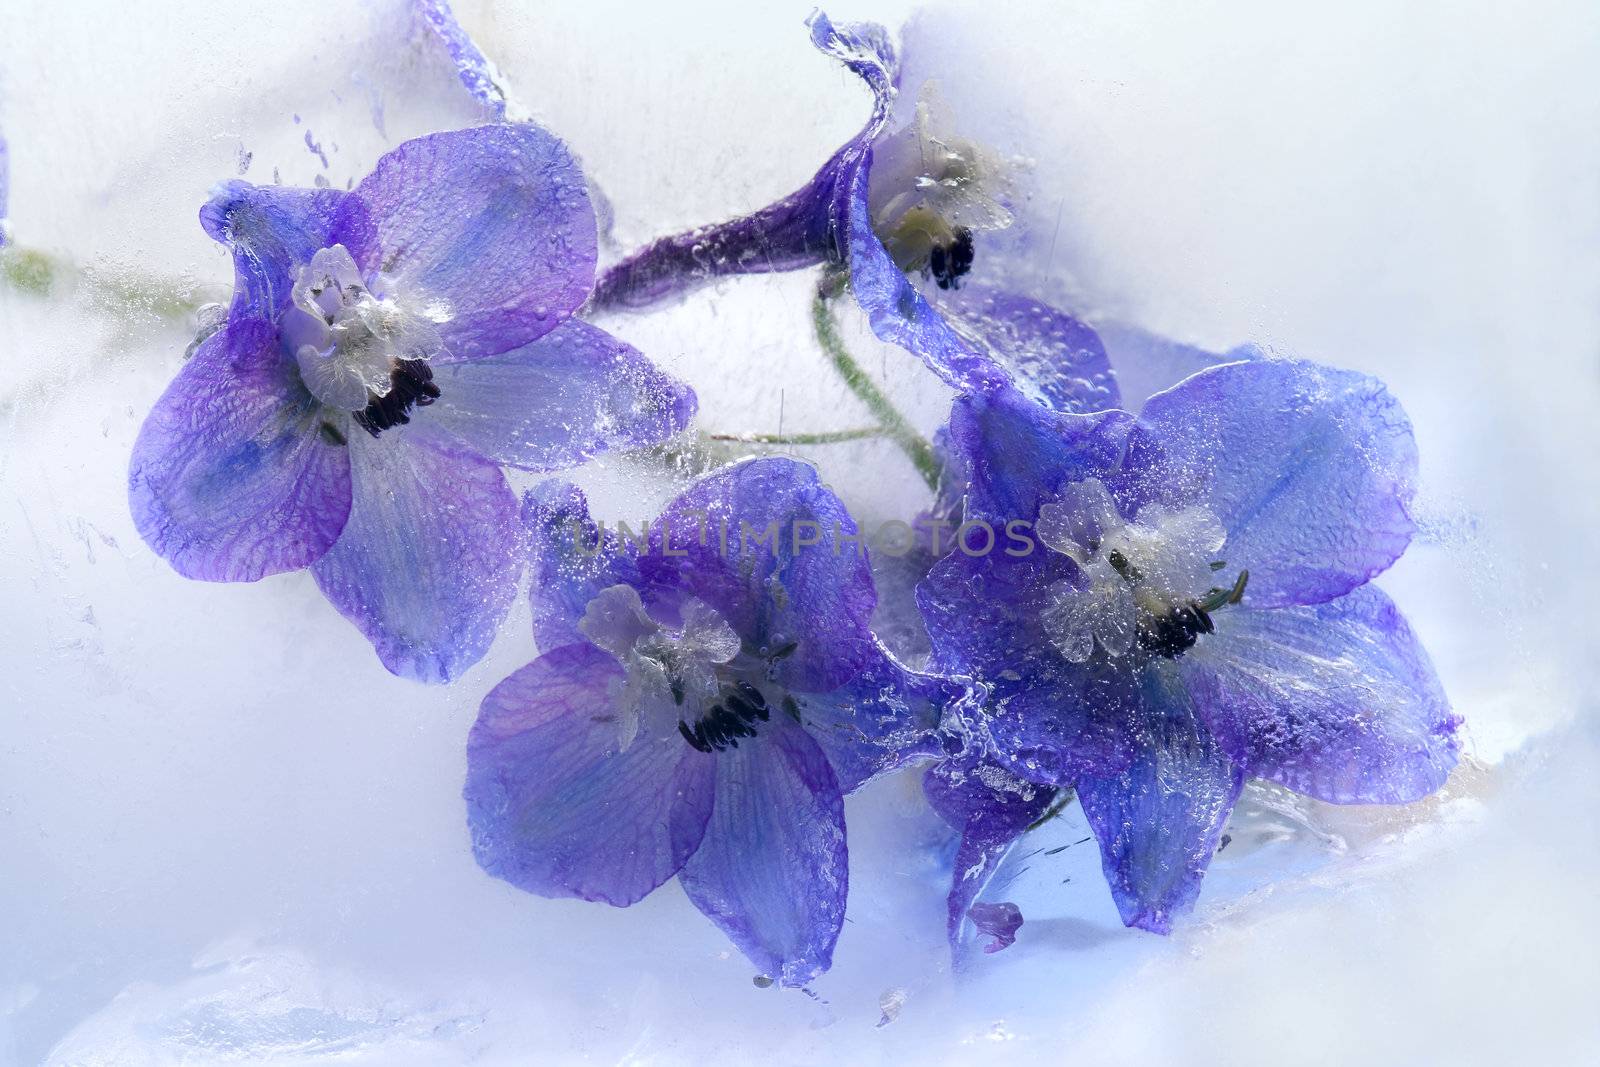  Frozen    blue delphinium flower  by foryouinf